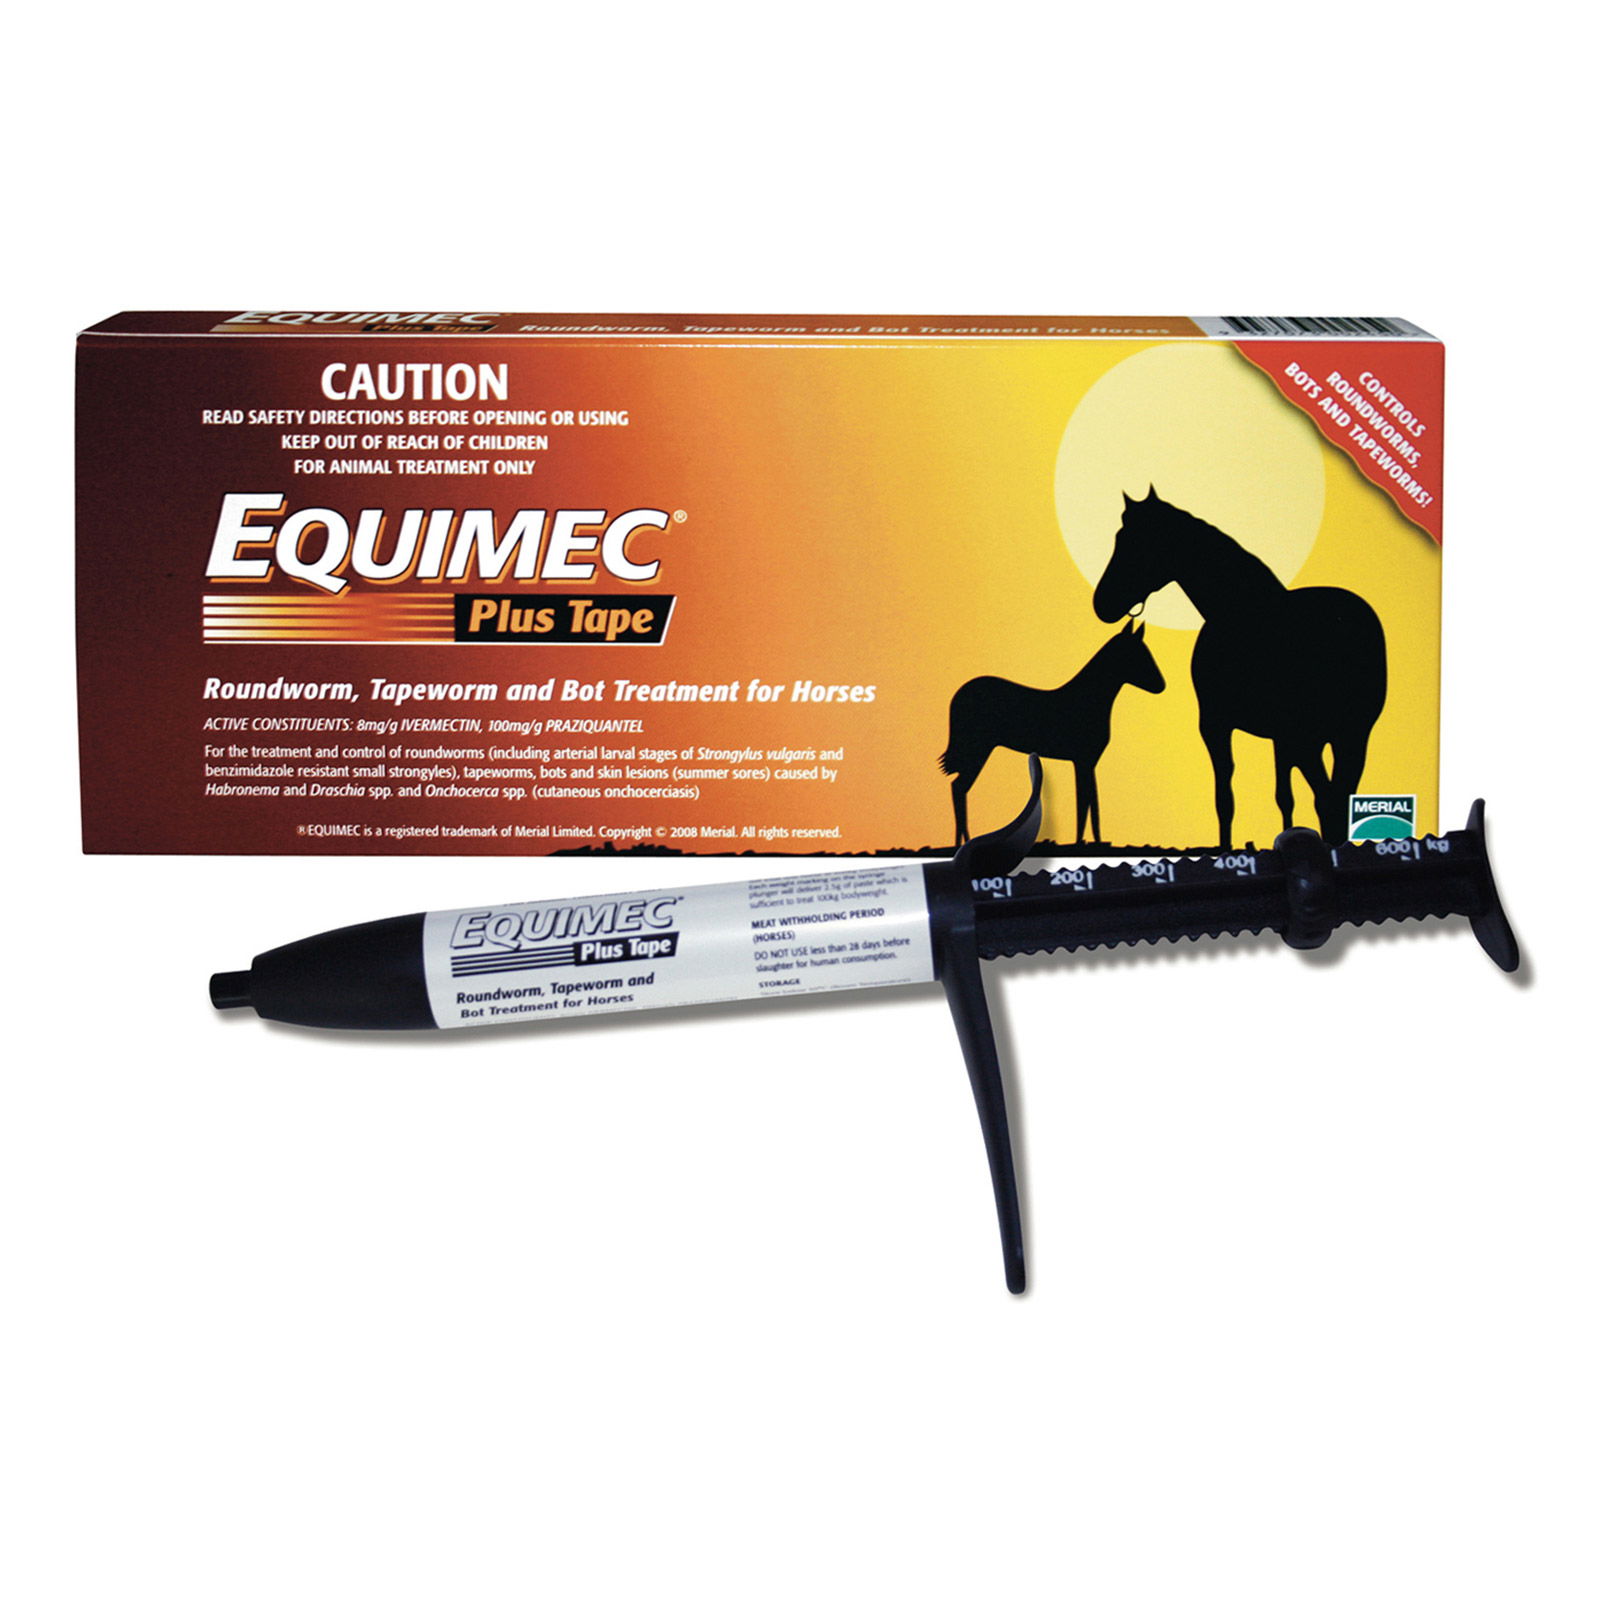 Equimec Plus Horse Wormer Paste for Horse Supplies